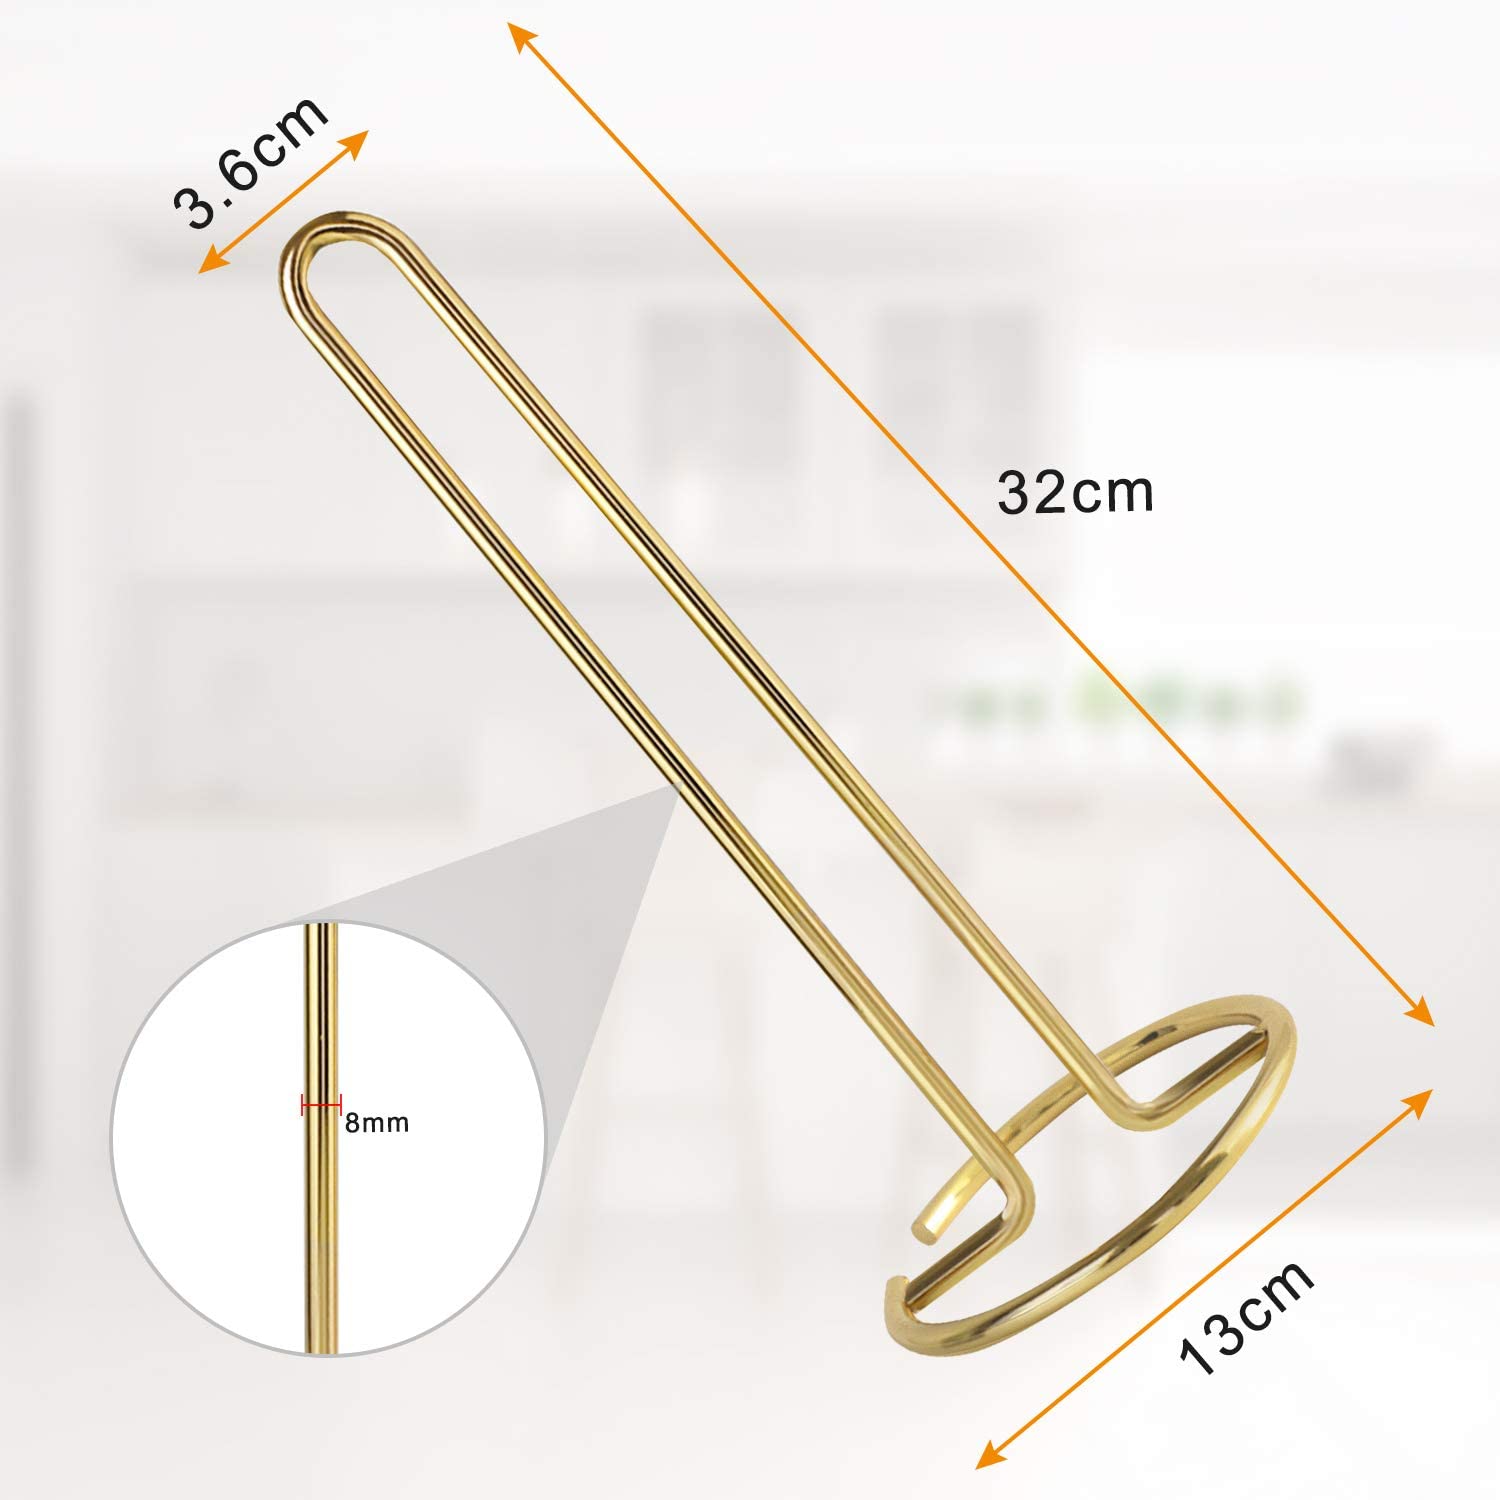 Golden metal kitchen paper holder